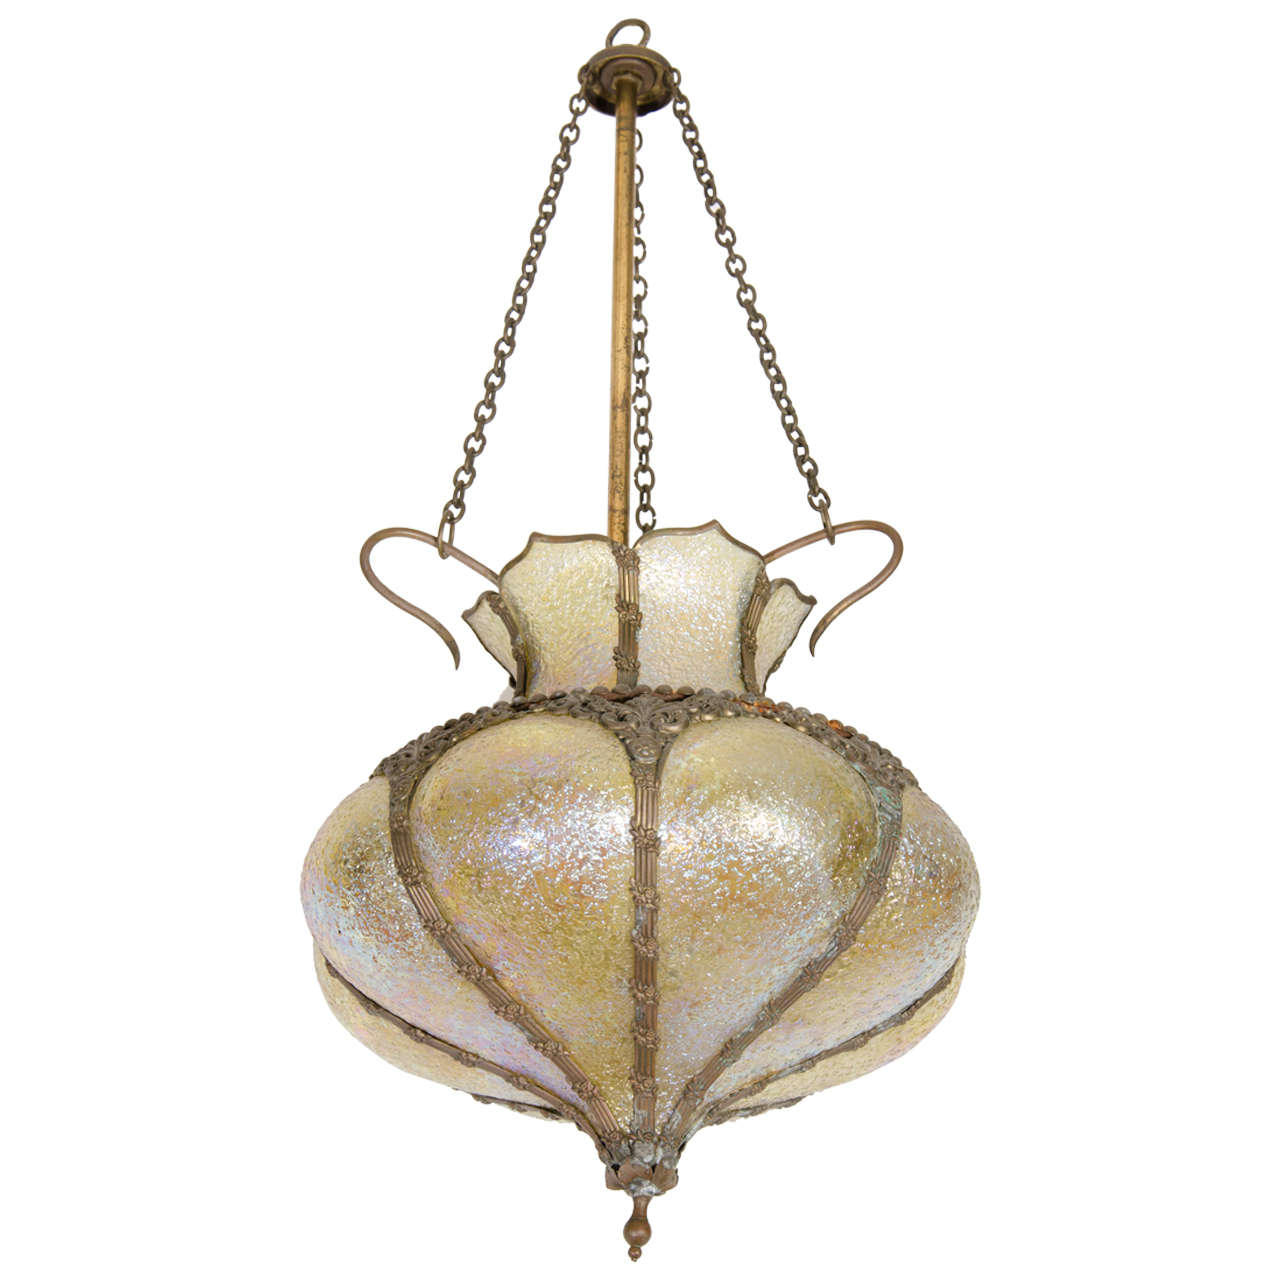 Art Nouveau Hanging Lantern with Pale Yellow Iridescent Glass